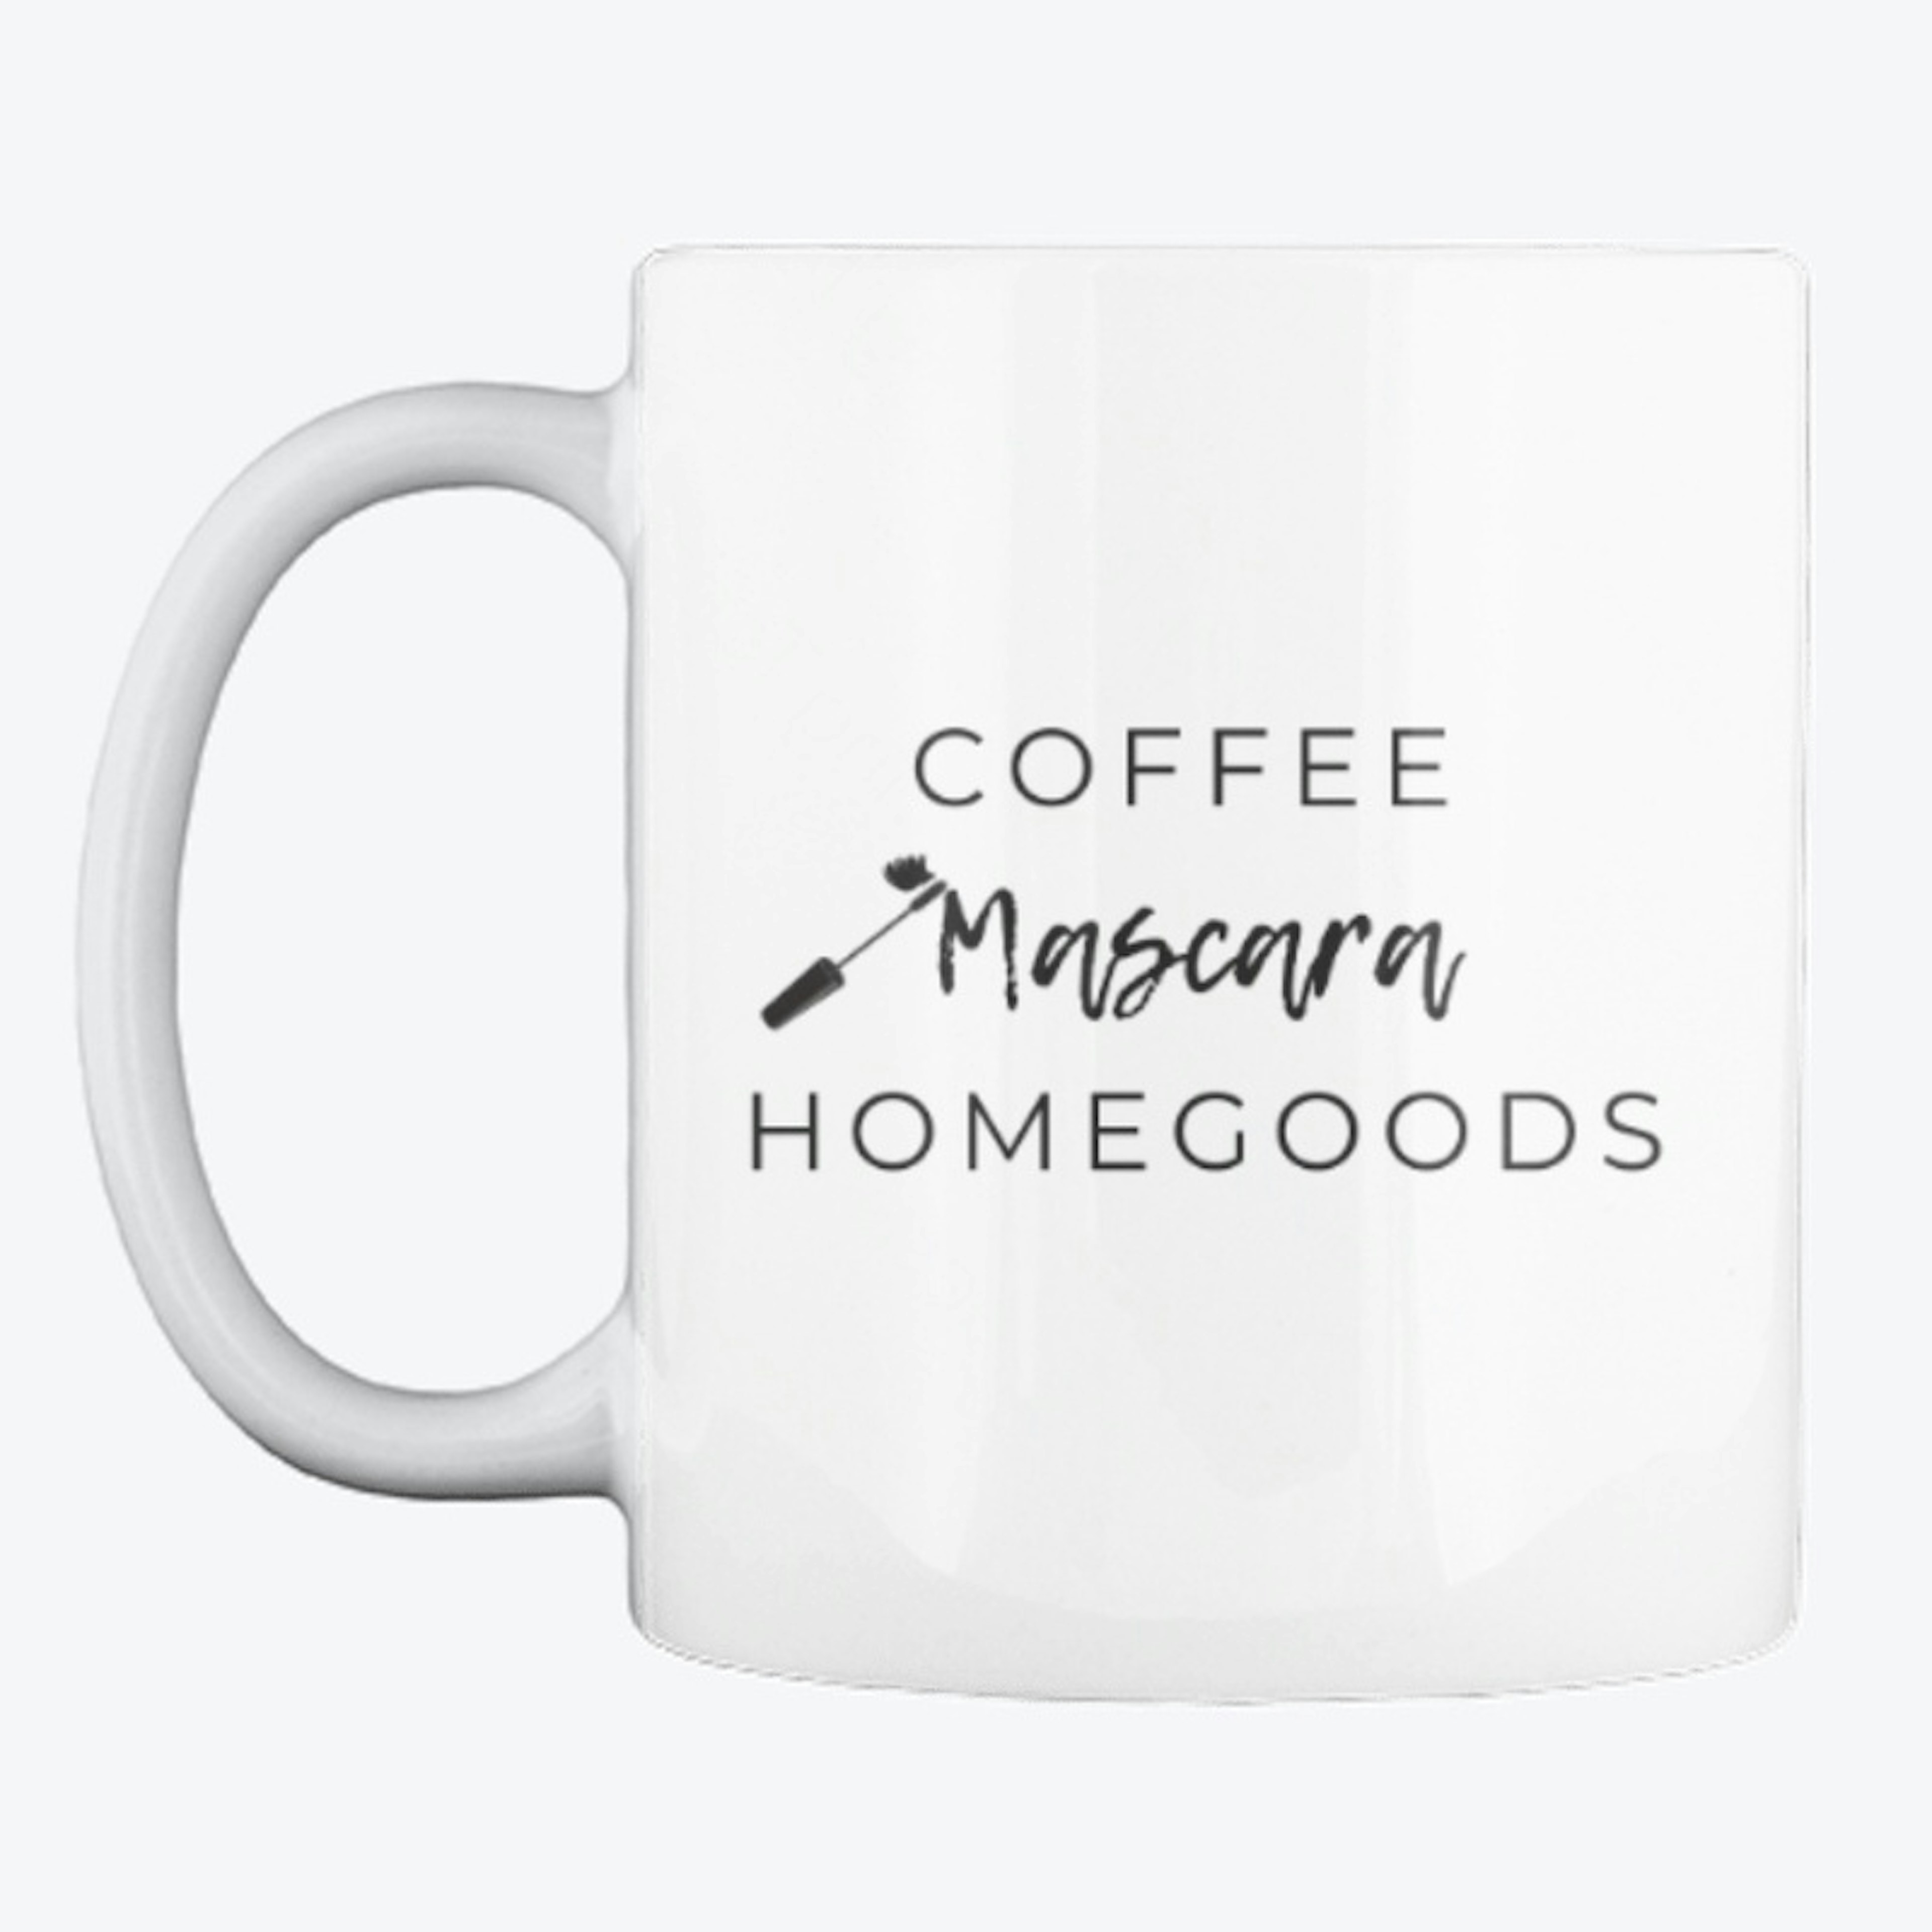 Coffee, Mascara, Homegoods v2